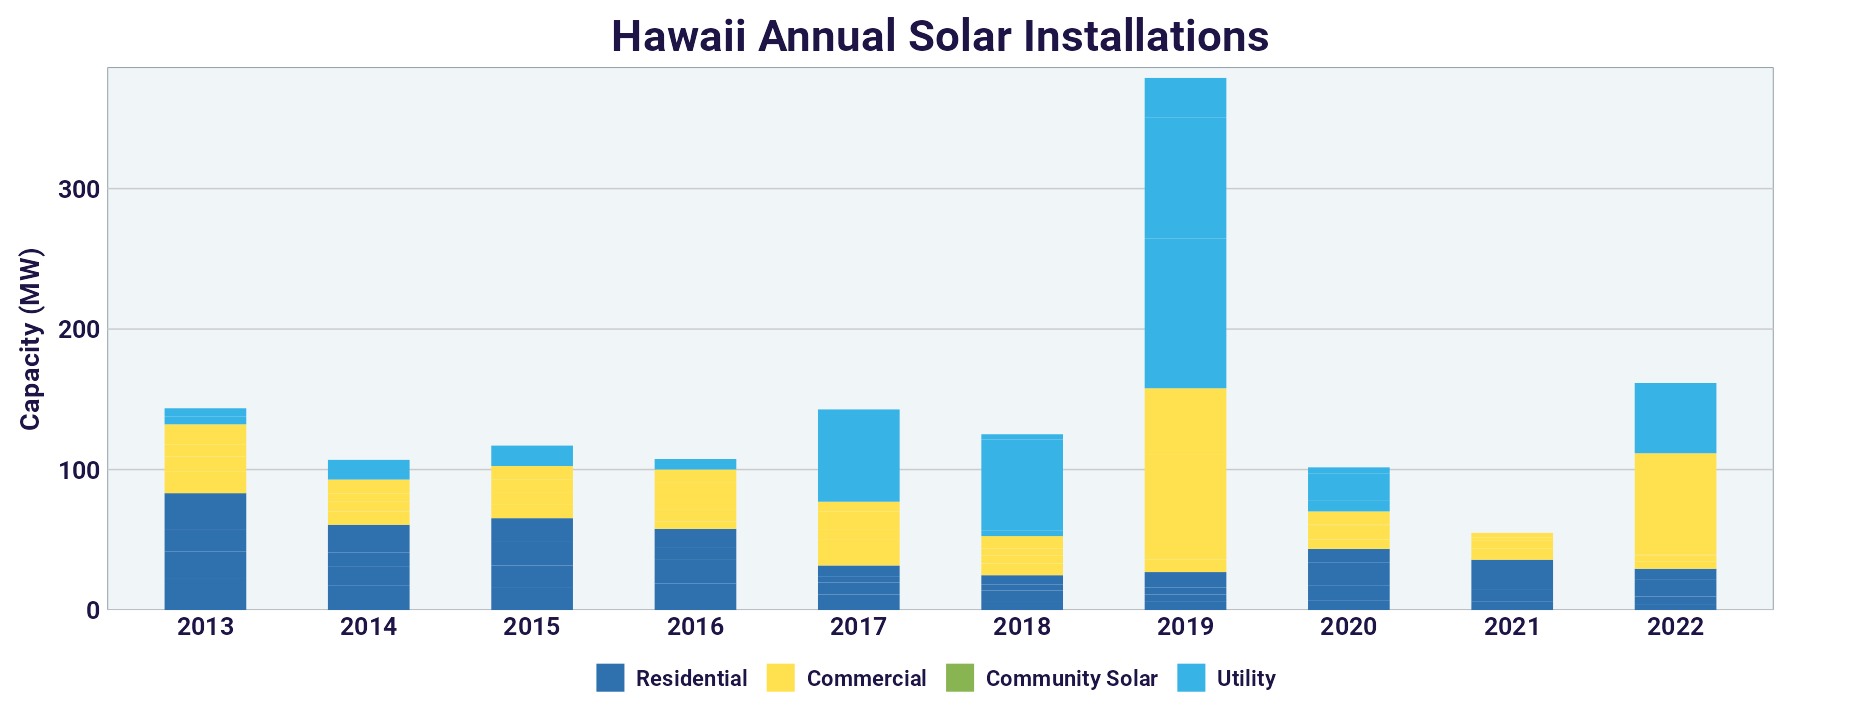 Hawaii Annual Solar Installations